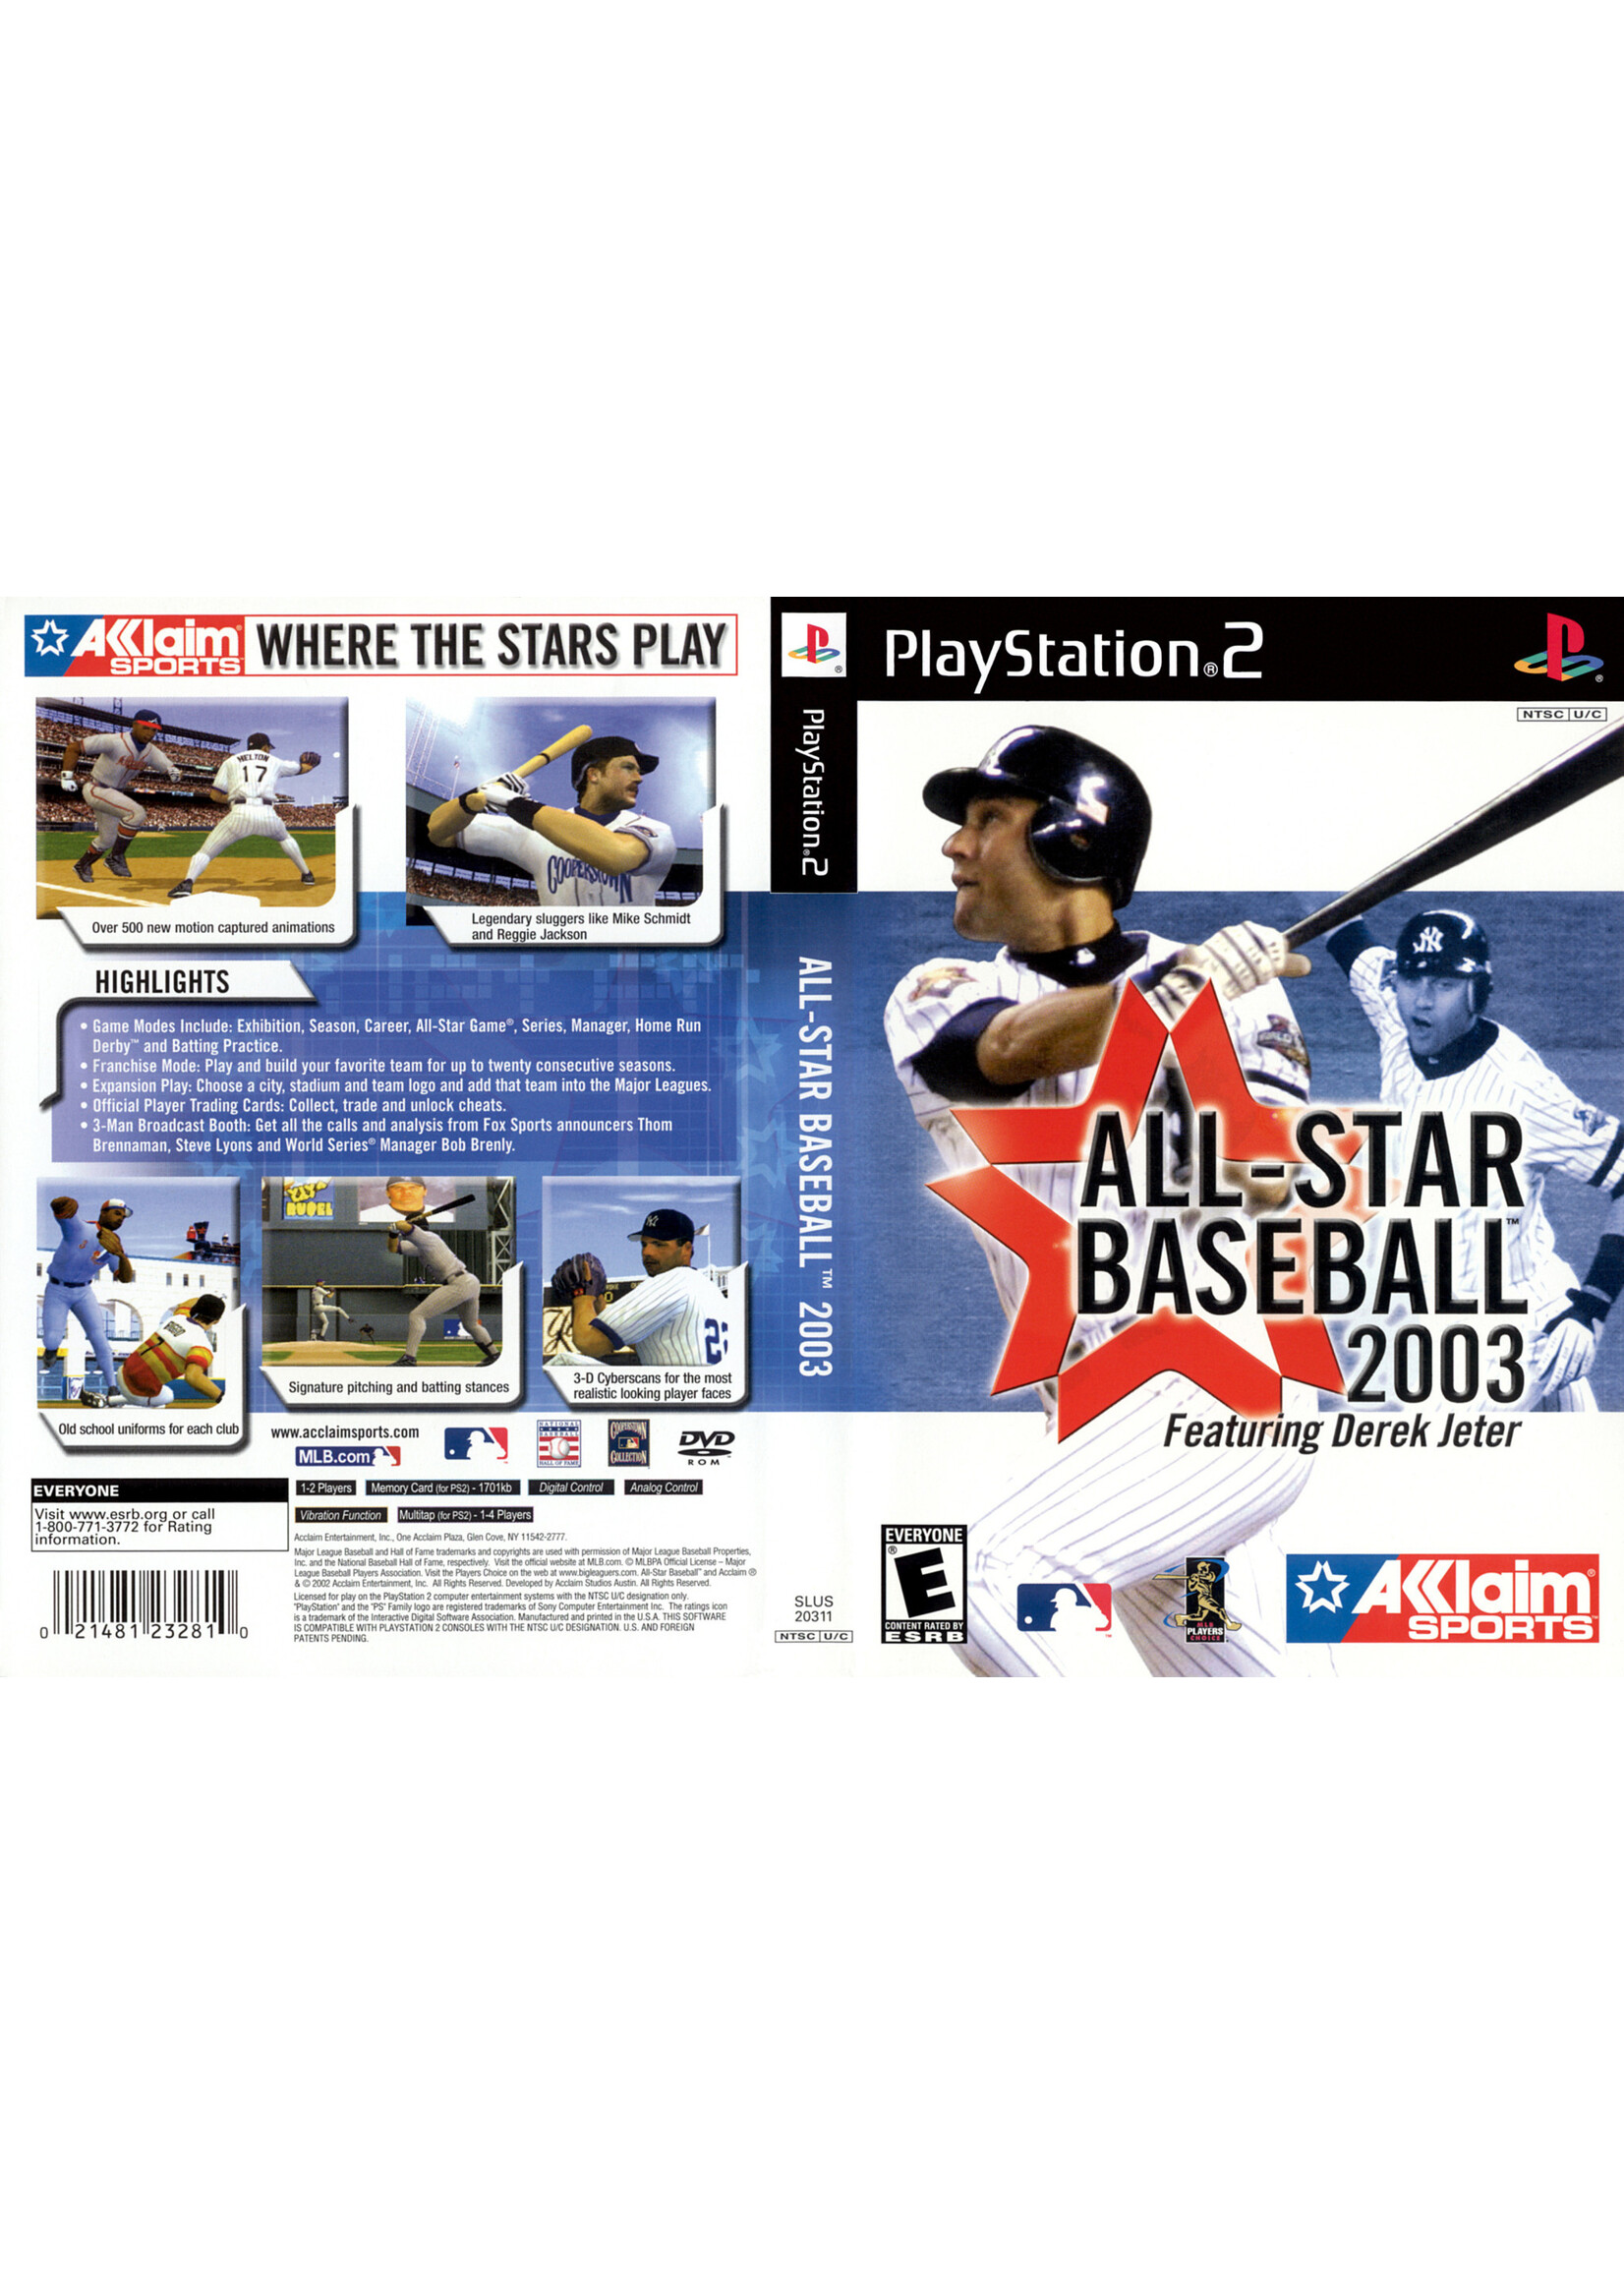 Sony Playstation 2 (PS2) All-Star Baseball 2003